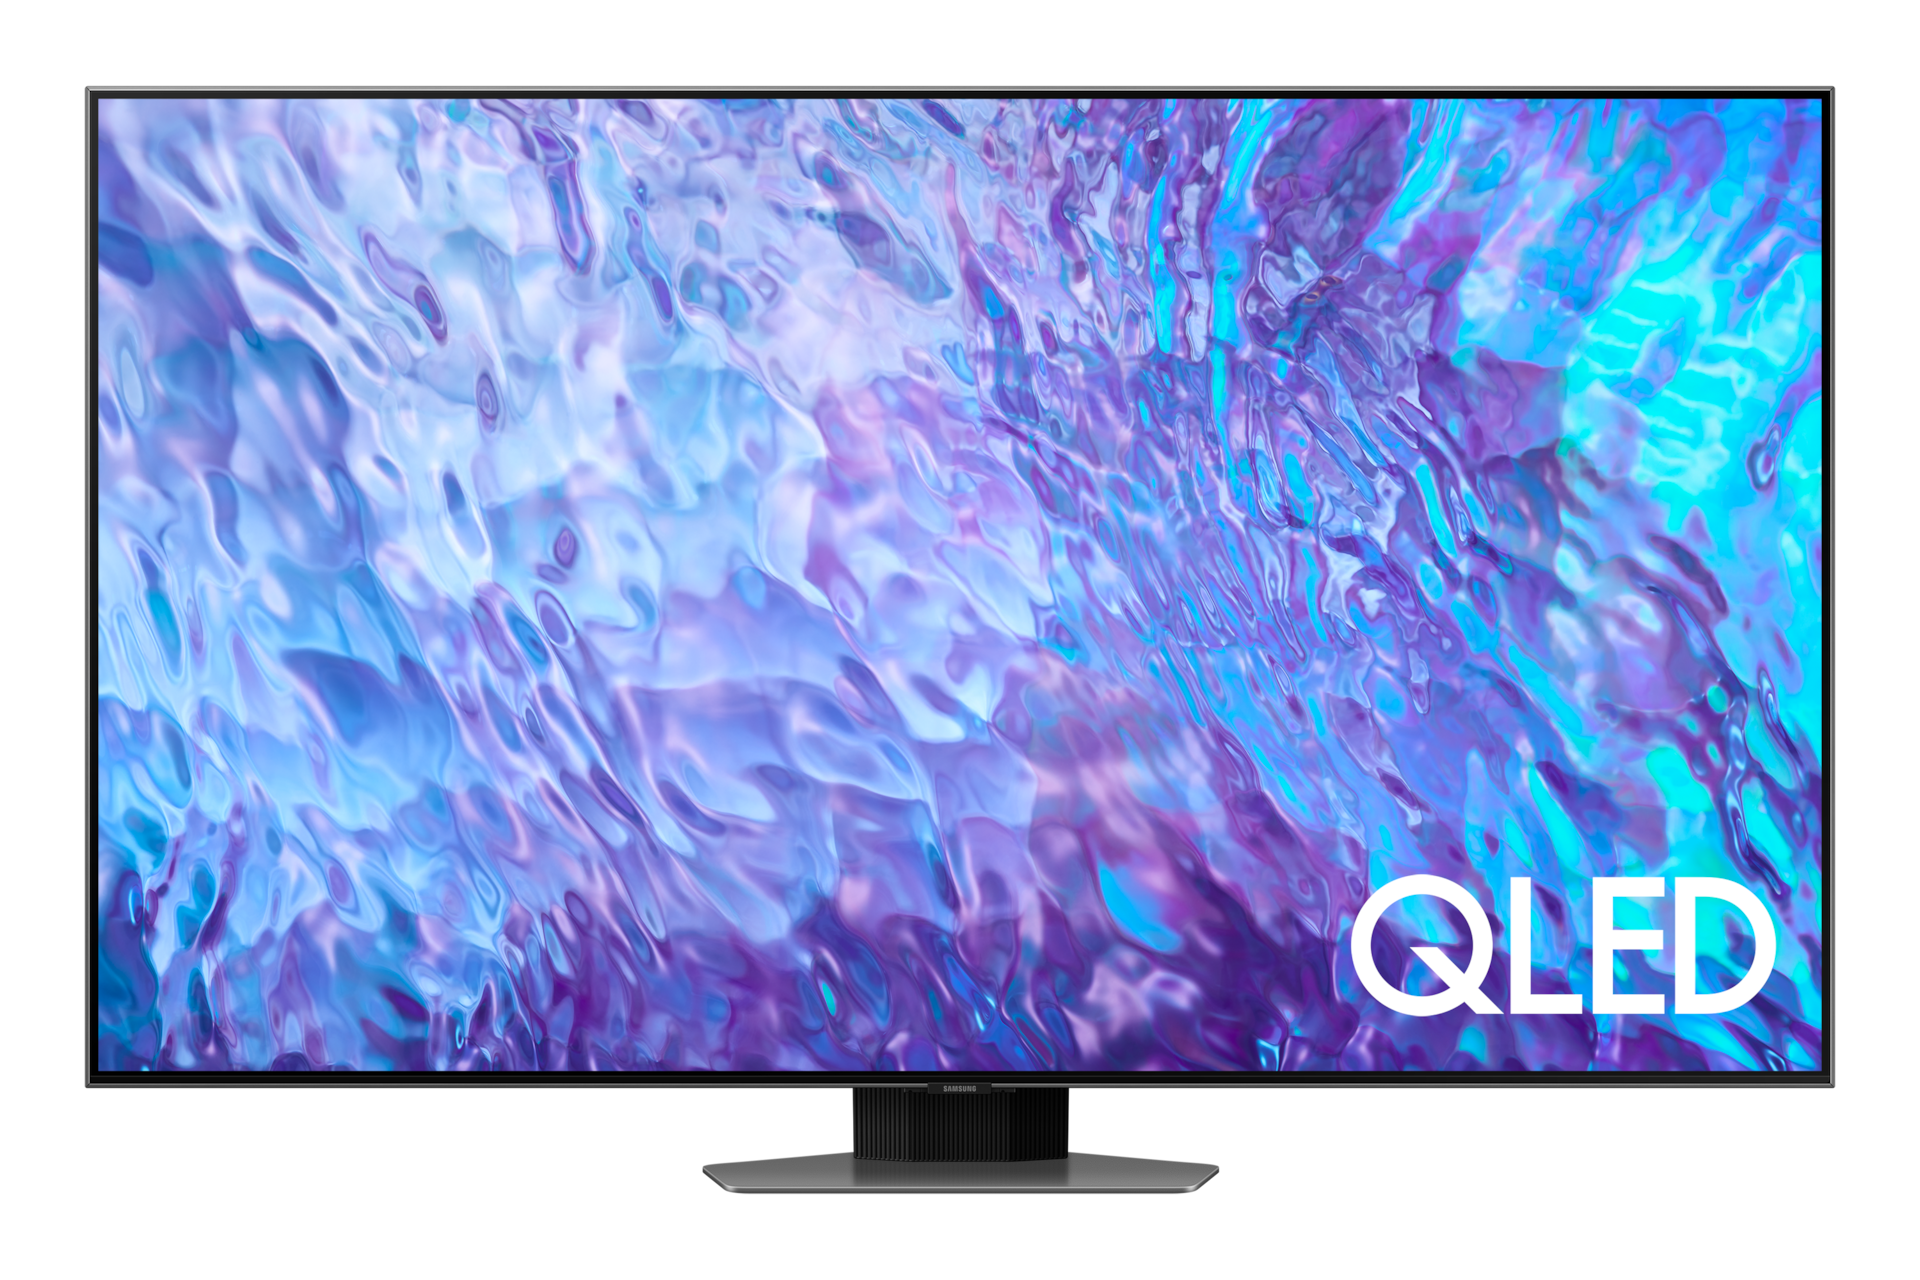 Telewizor Samsung QLED Q80C QE65Q80CATXXH - widok na wprost telewizora